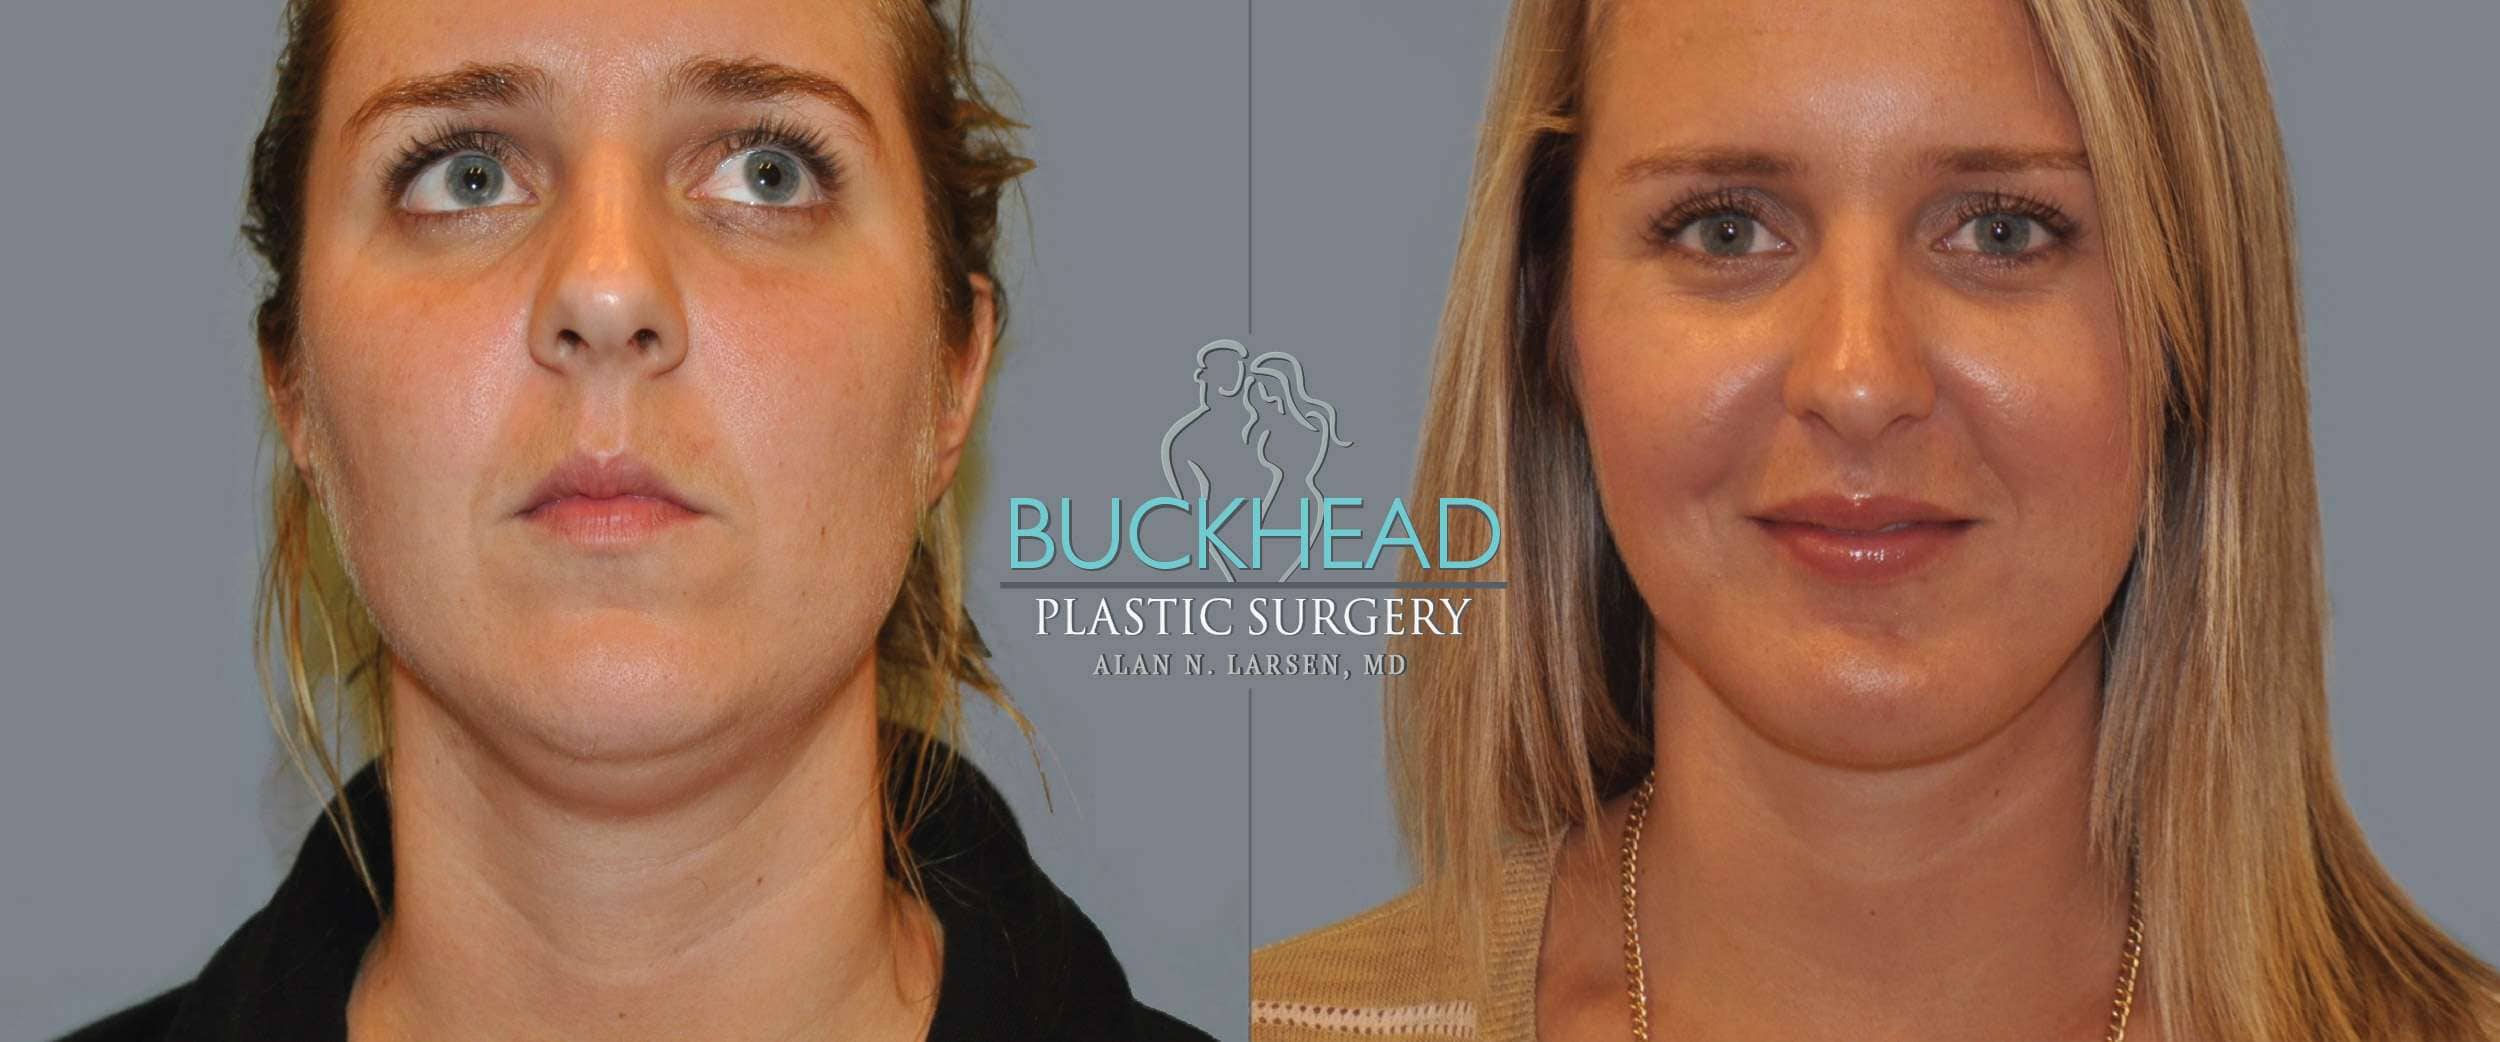 Before and After Photo Gallery | Liposuction - Neck | Buckhead Plastic Surgery | Alan N. Larsen, MD | Double Board-Certified Plastic Surgeon | Atlanta GA